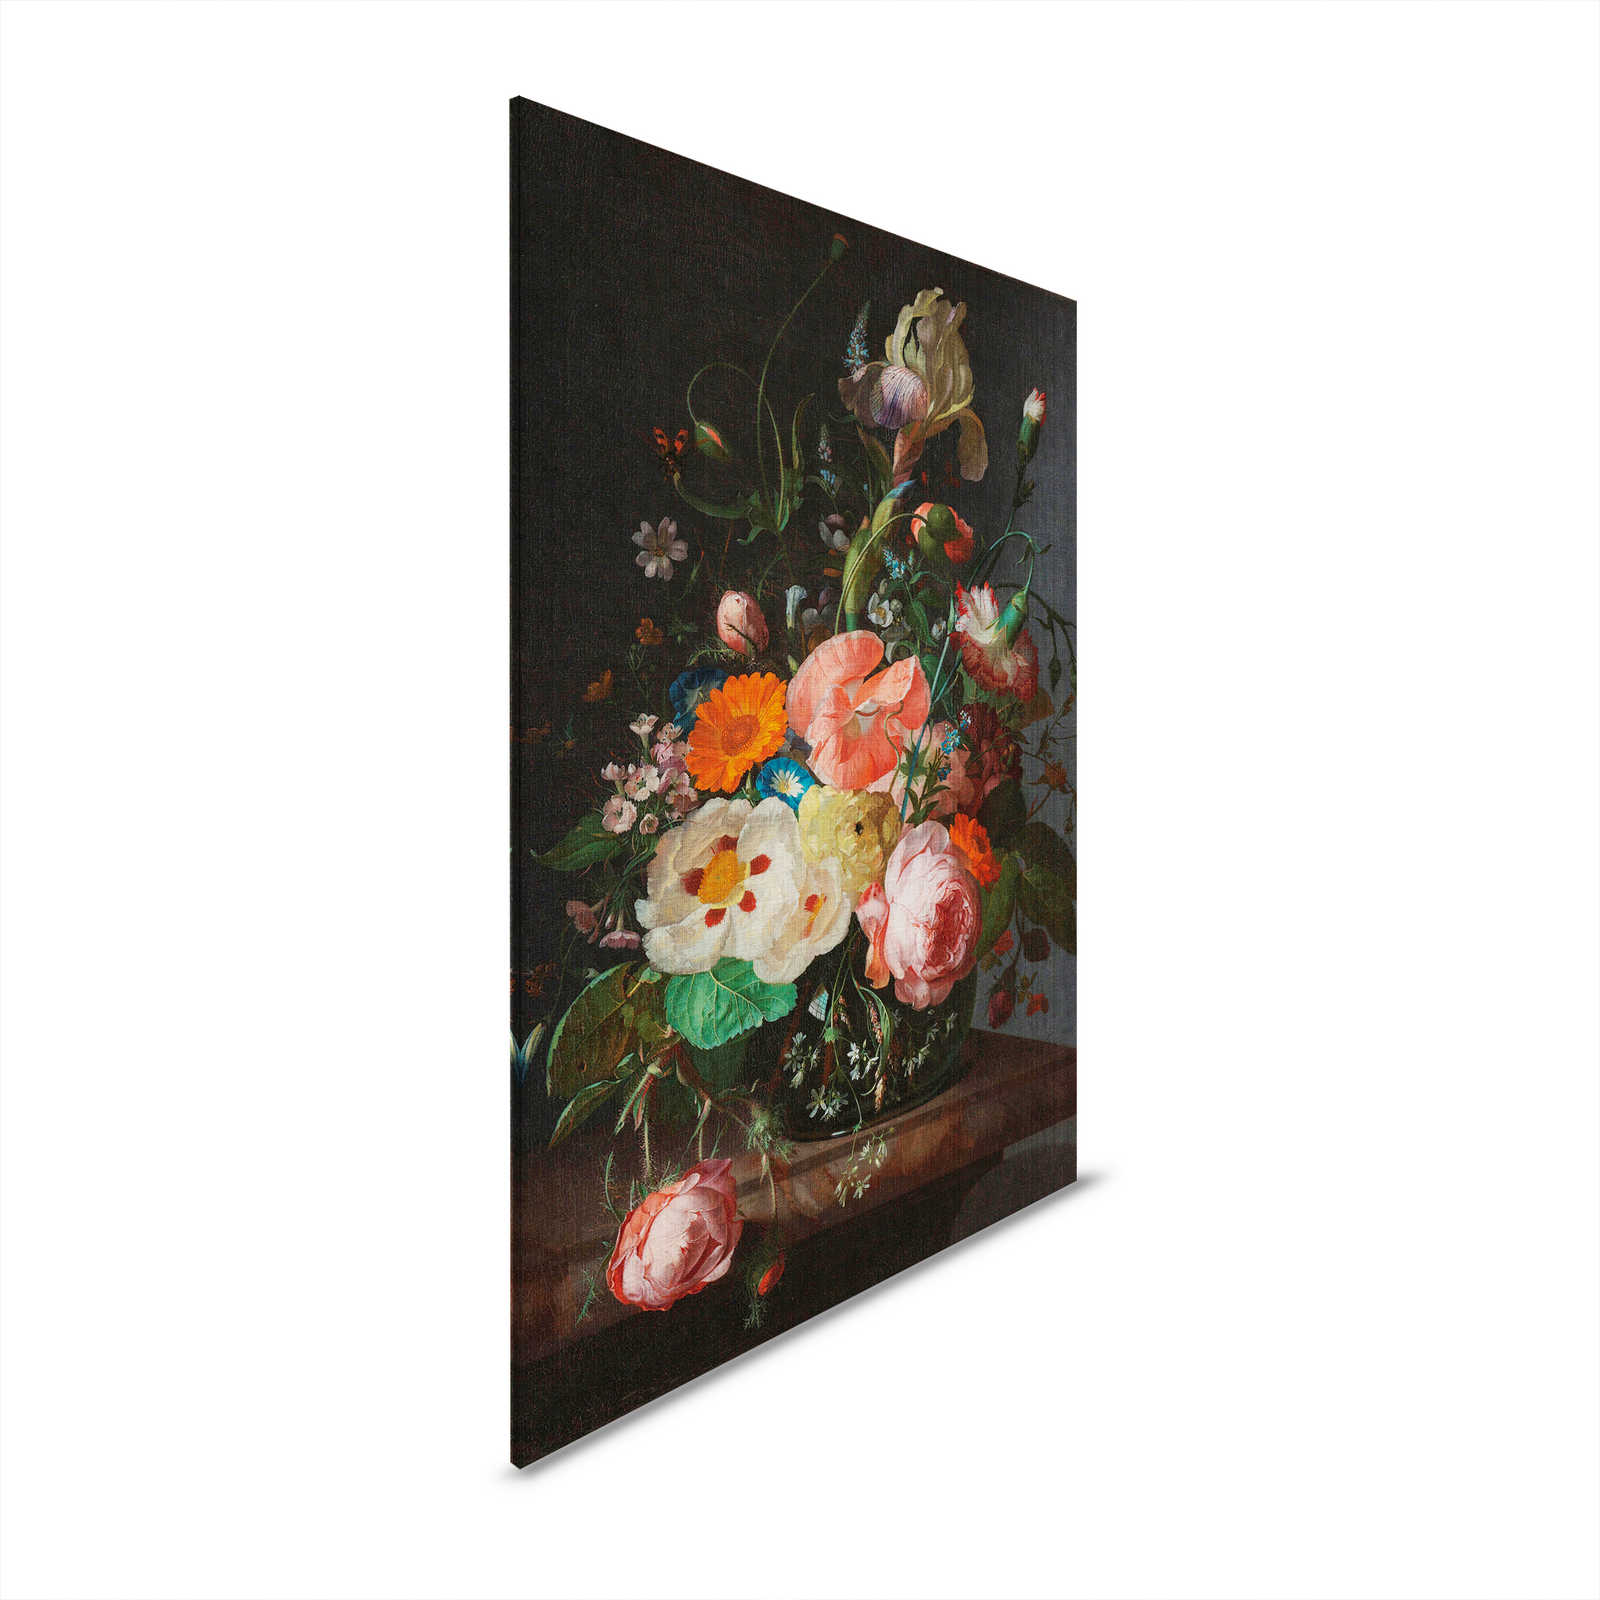 Artists Studio 3 - Flowers Canvas Painting Still Life - 0.80 m x 1.20 m
